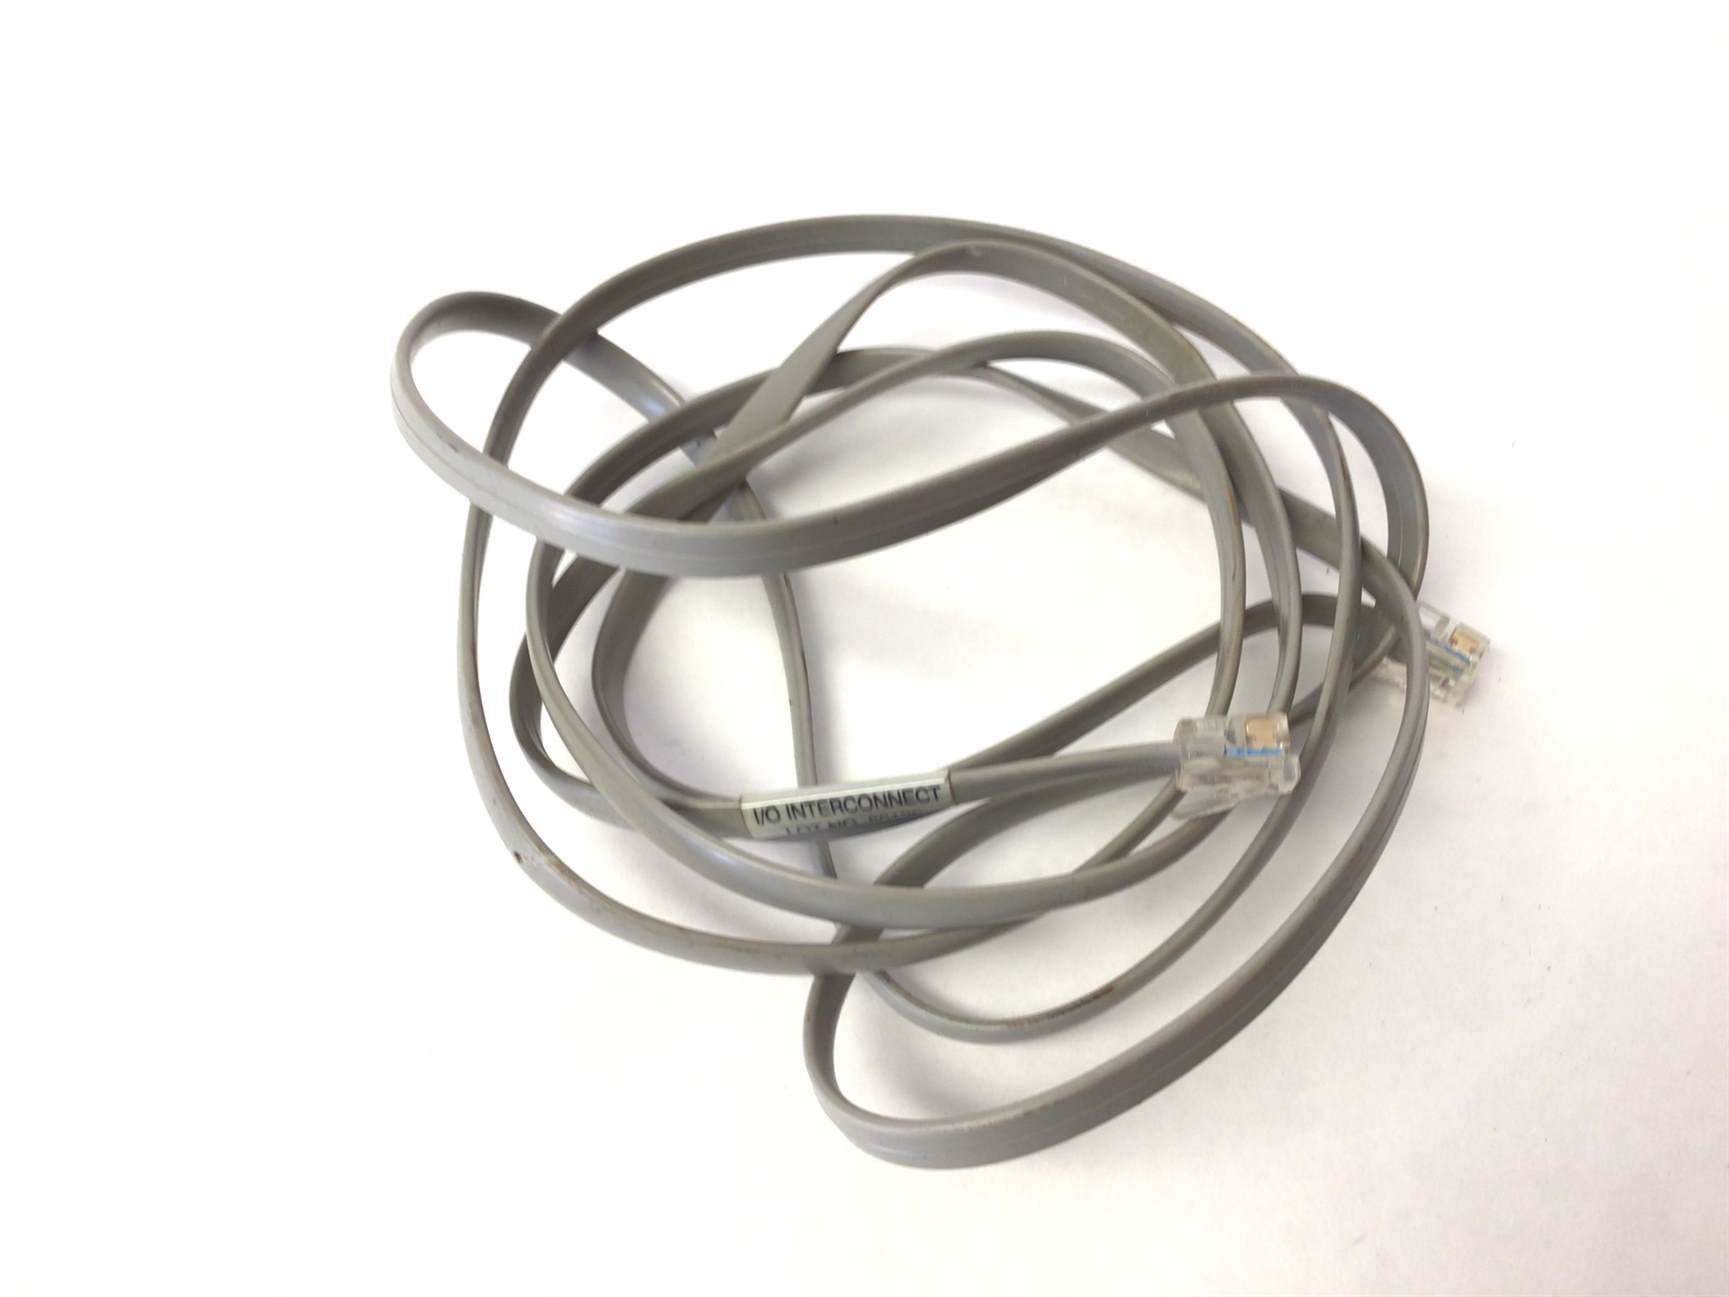 Trimline Schwinn Nautilus 6 pin I/O Interconnect Wire Harness